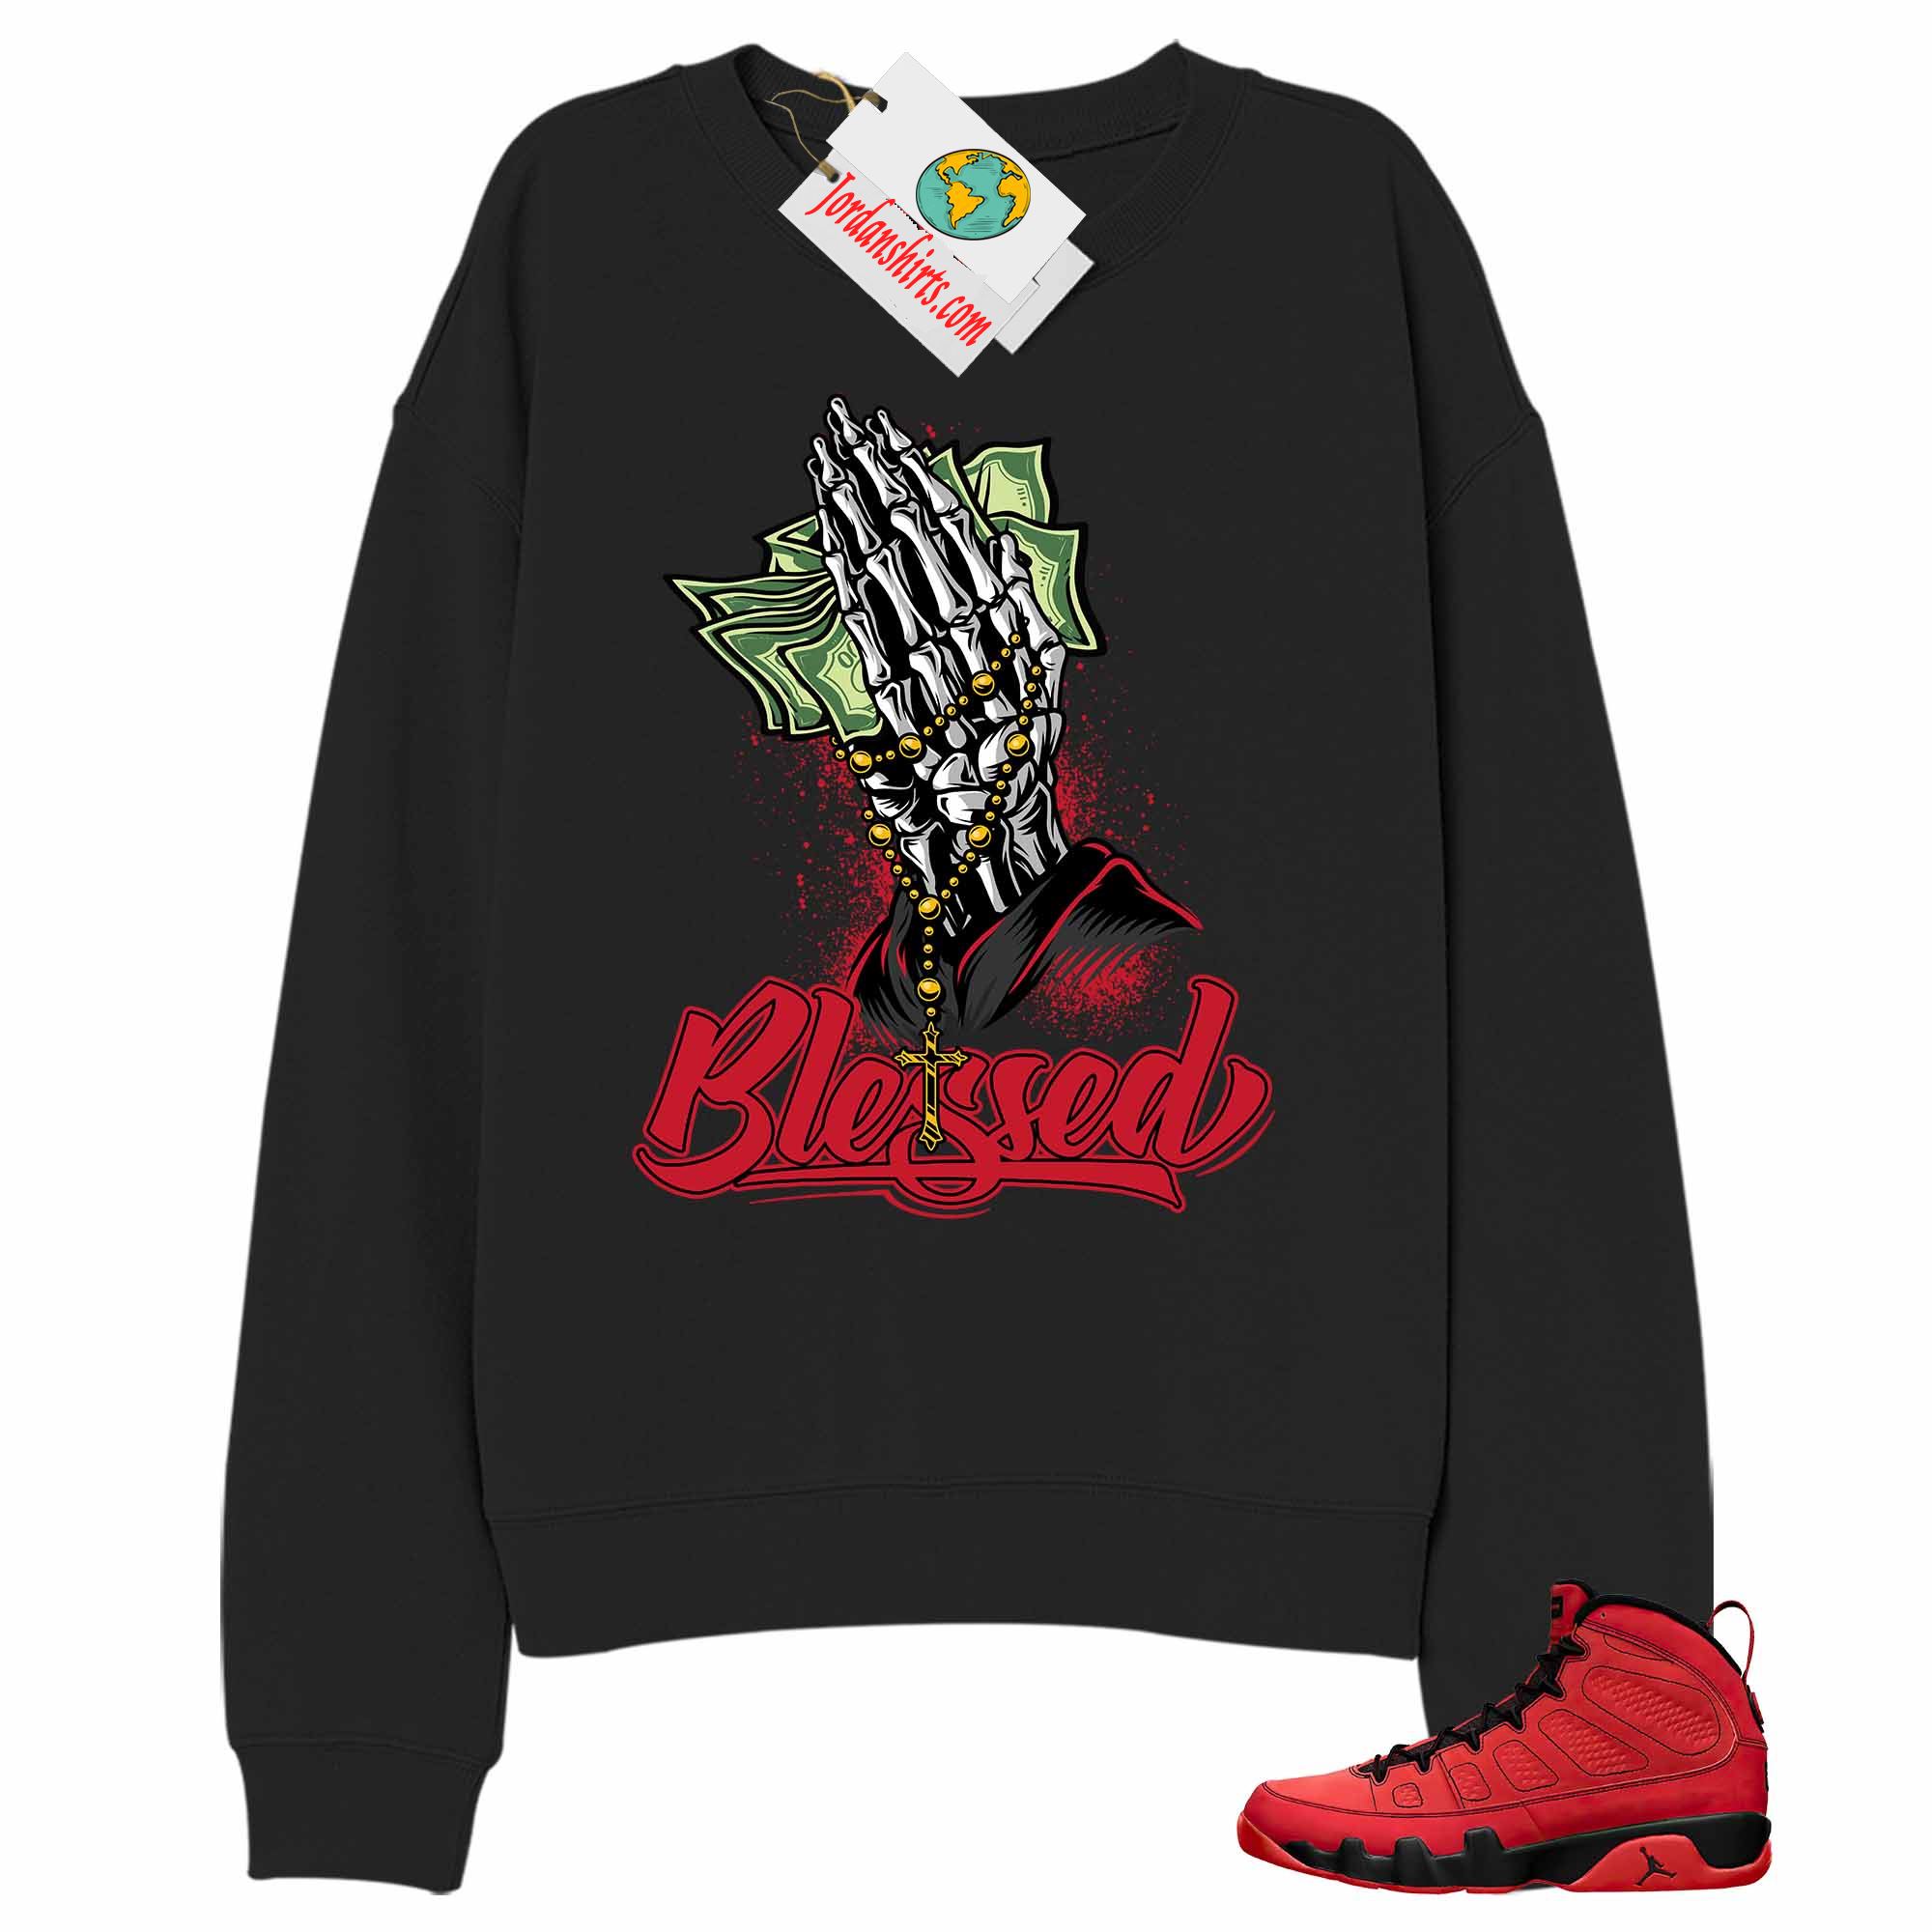 Jordan 9 Sweatshirt, Blessed Pray Hand Money Black Sweatshirt Air Jordan 9 Chile Red 9s Plus Size Up To 5xl